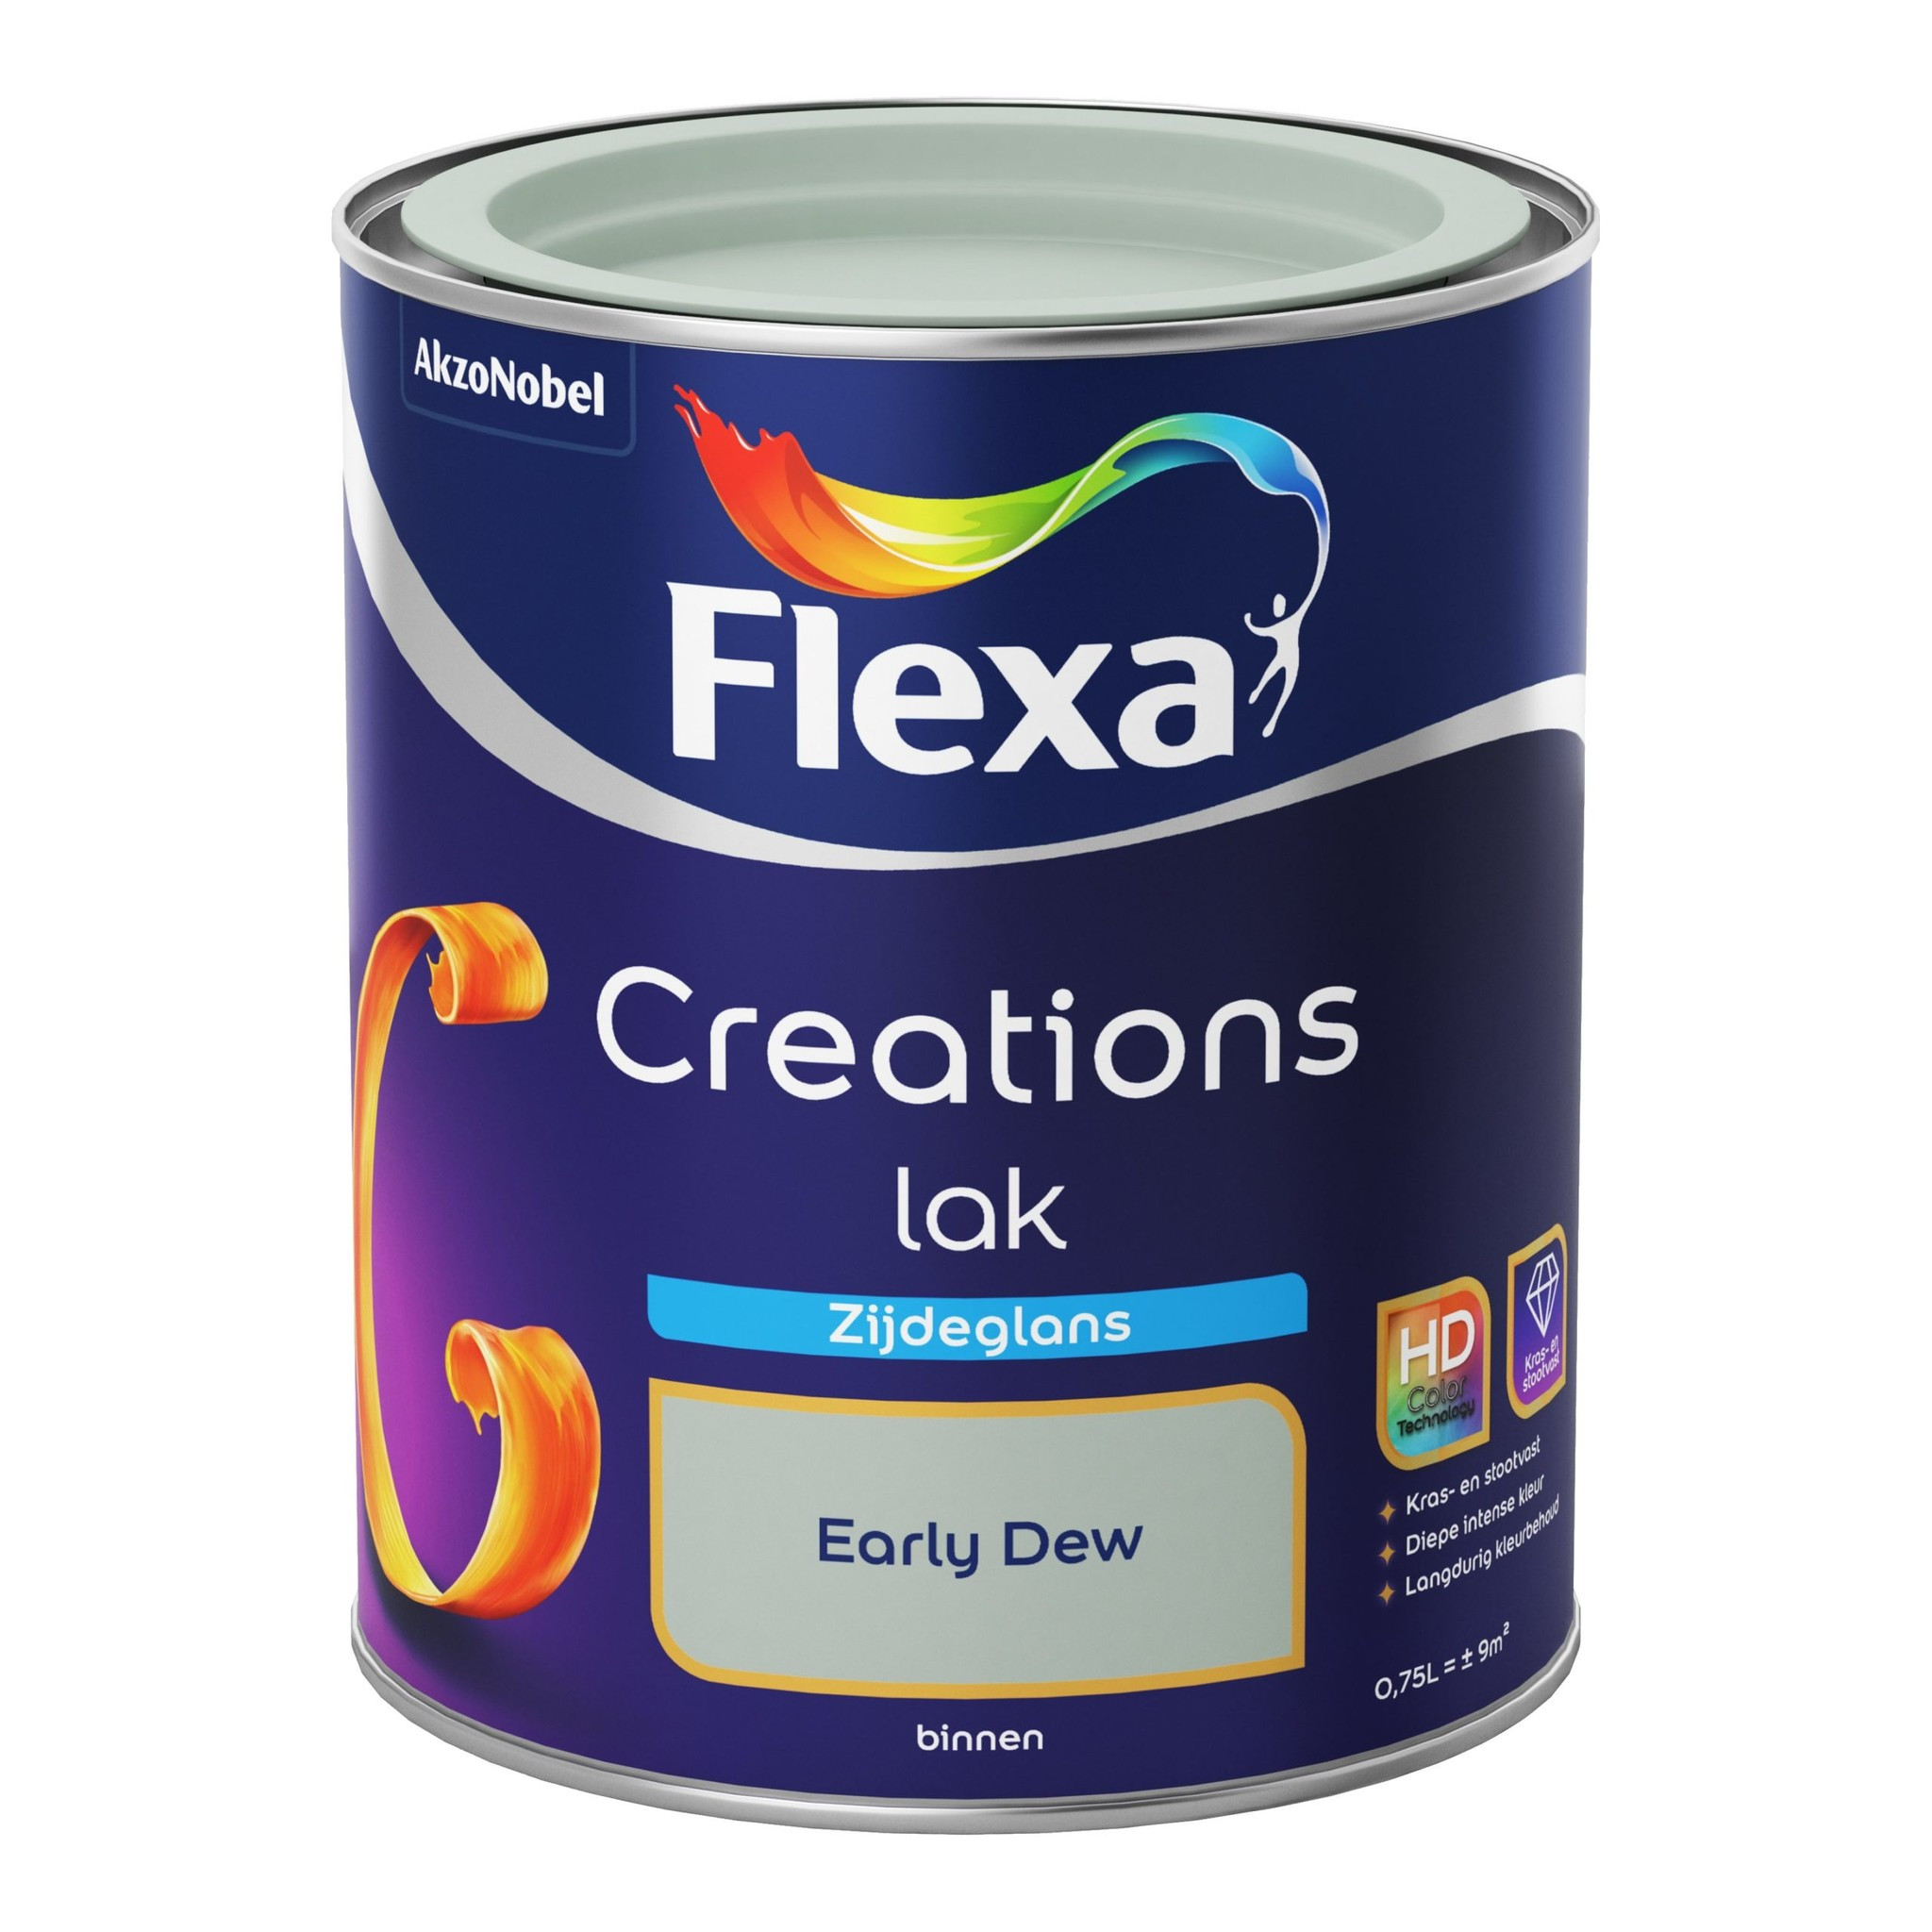 Flexa Creations Lak Zijdeglans - Early Dew